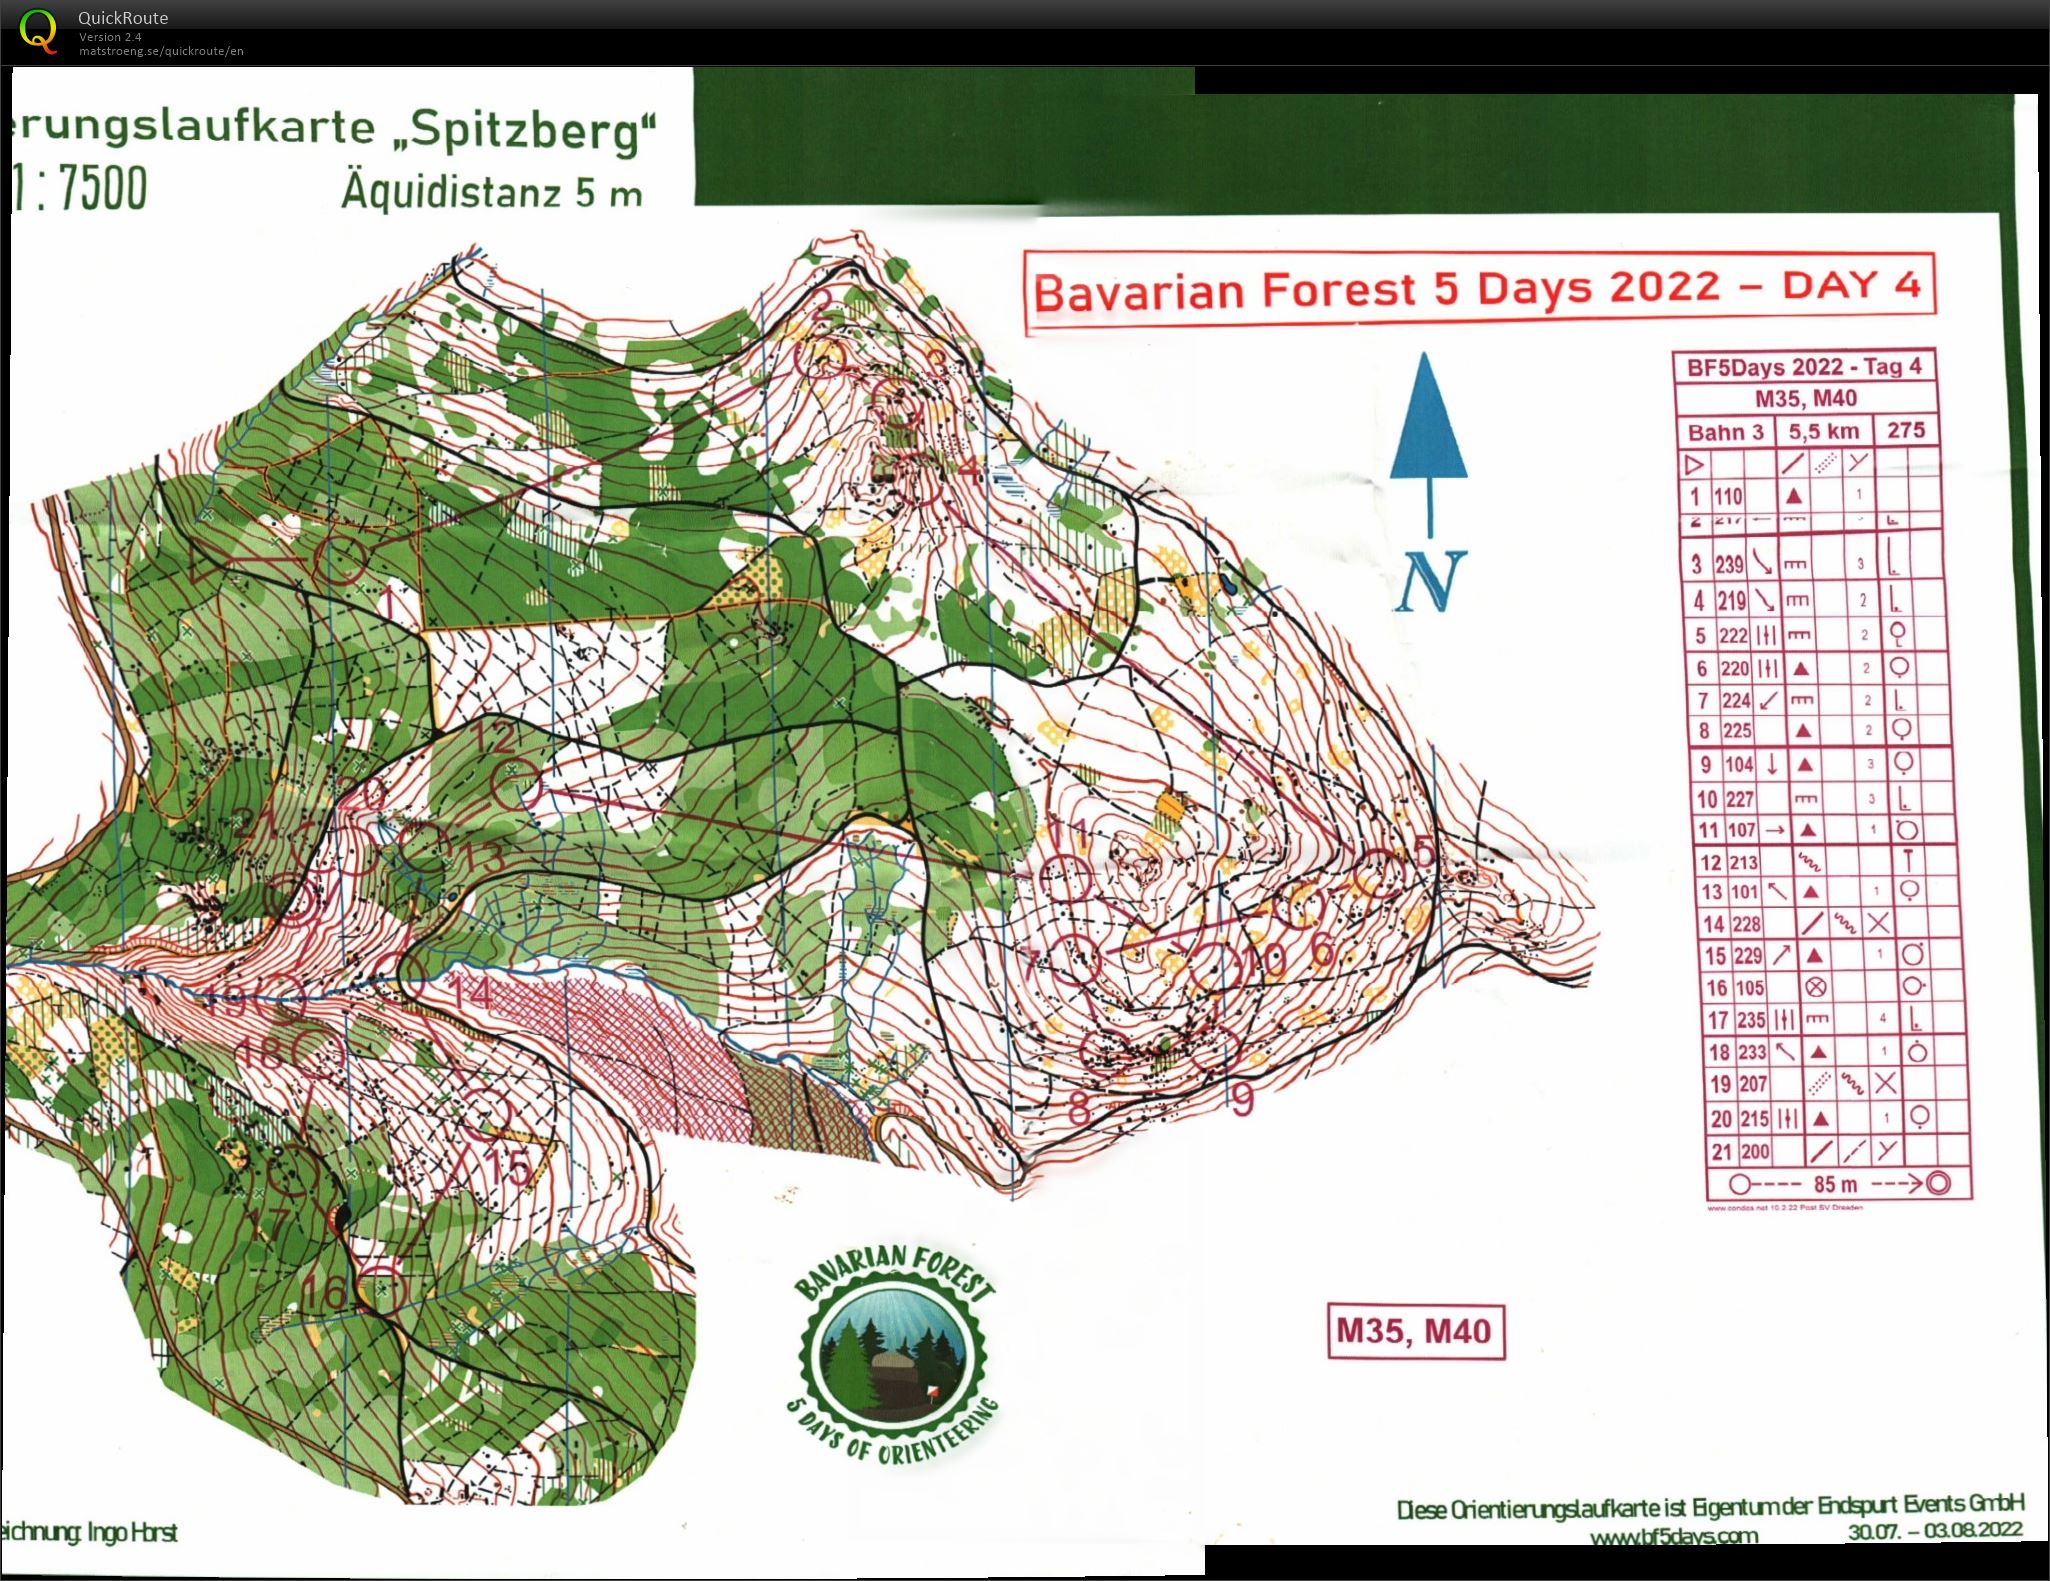 Bavarian Forest 5 Days - Day 4 (02-08-2022)